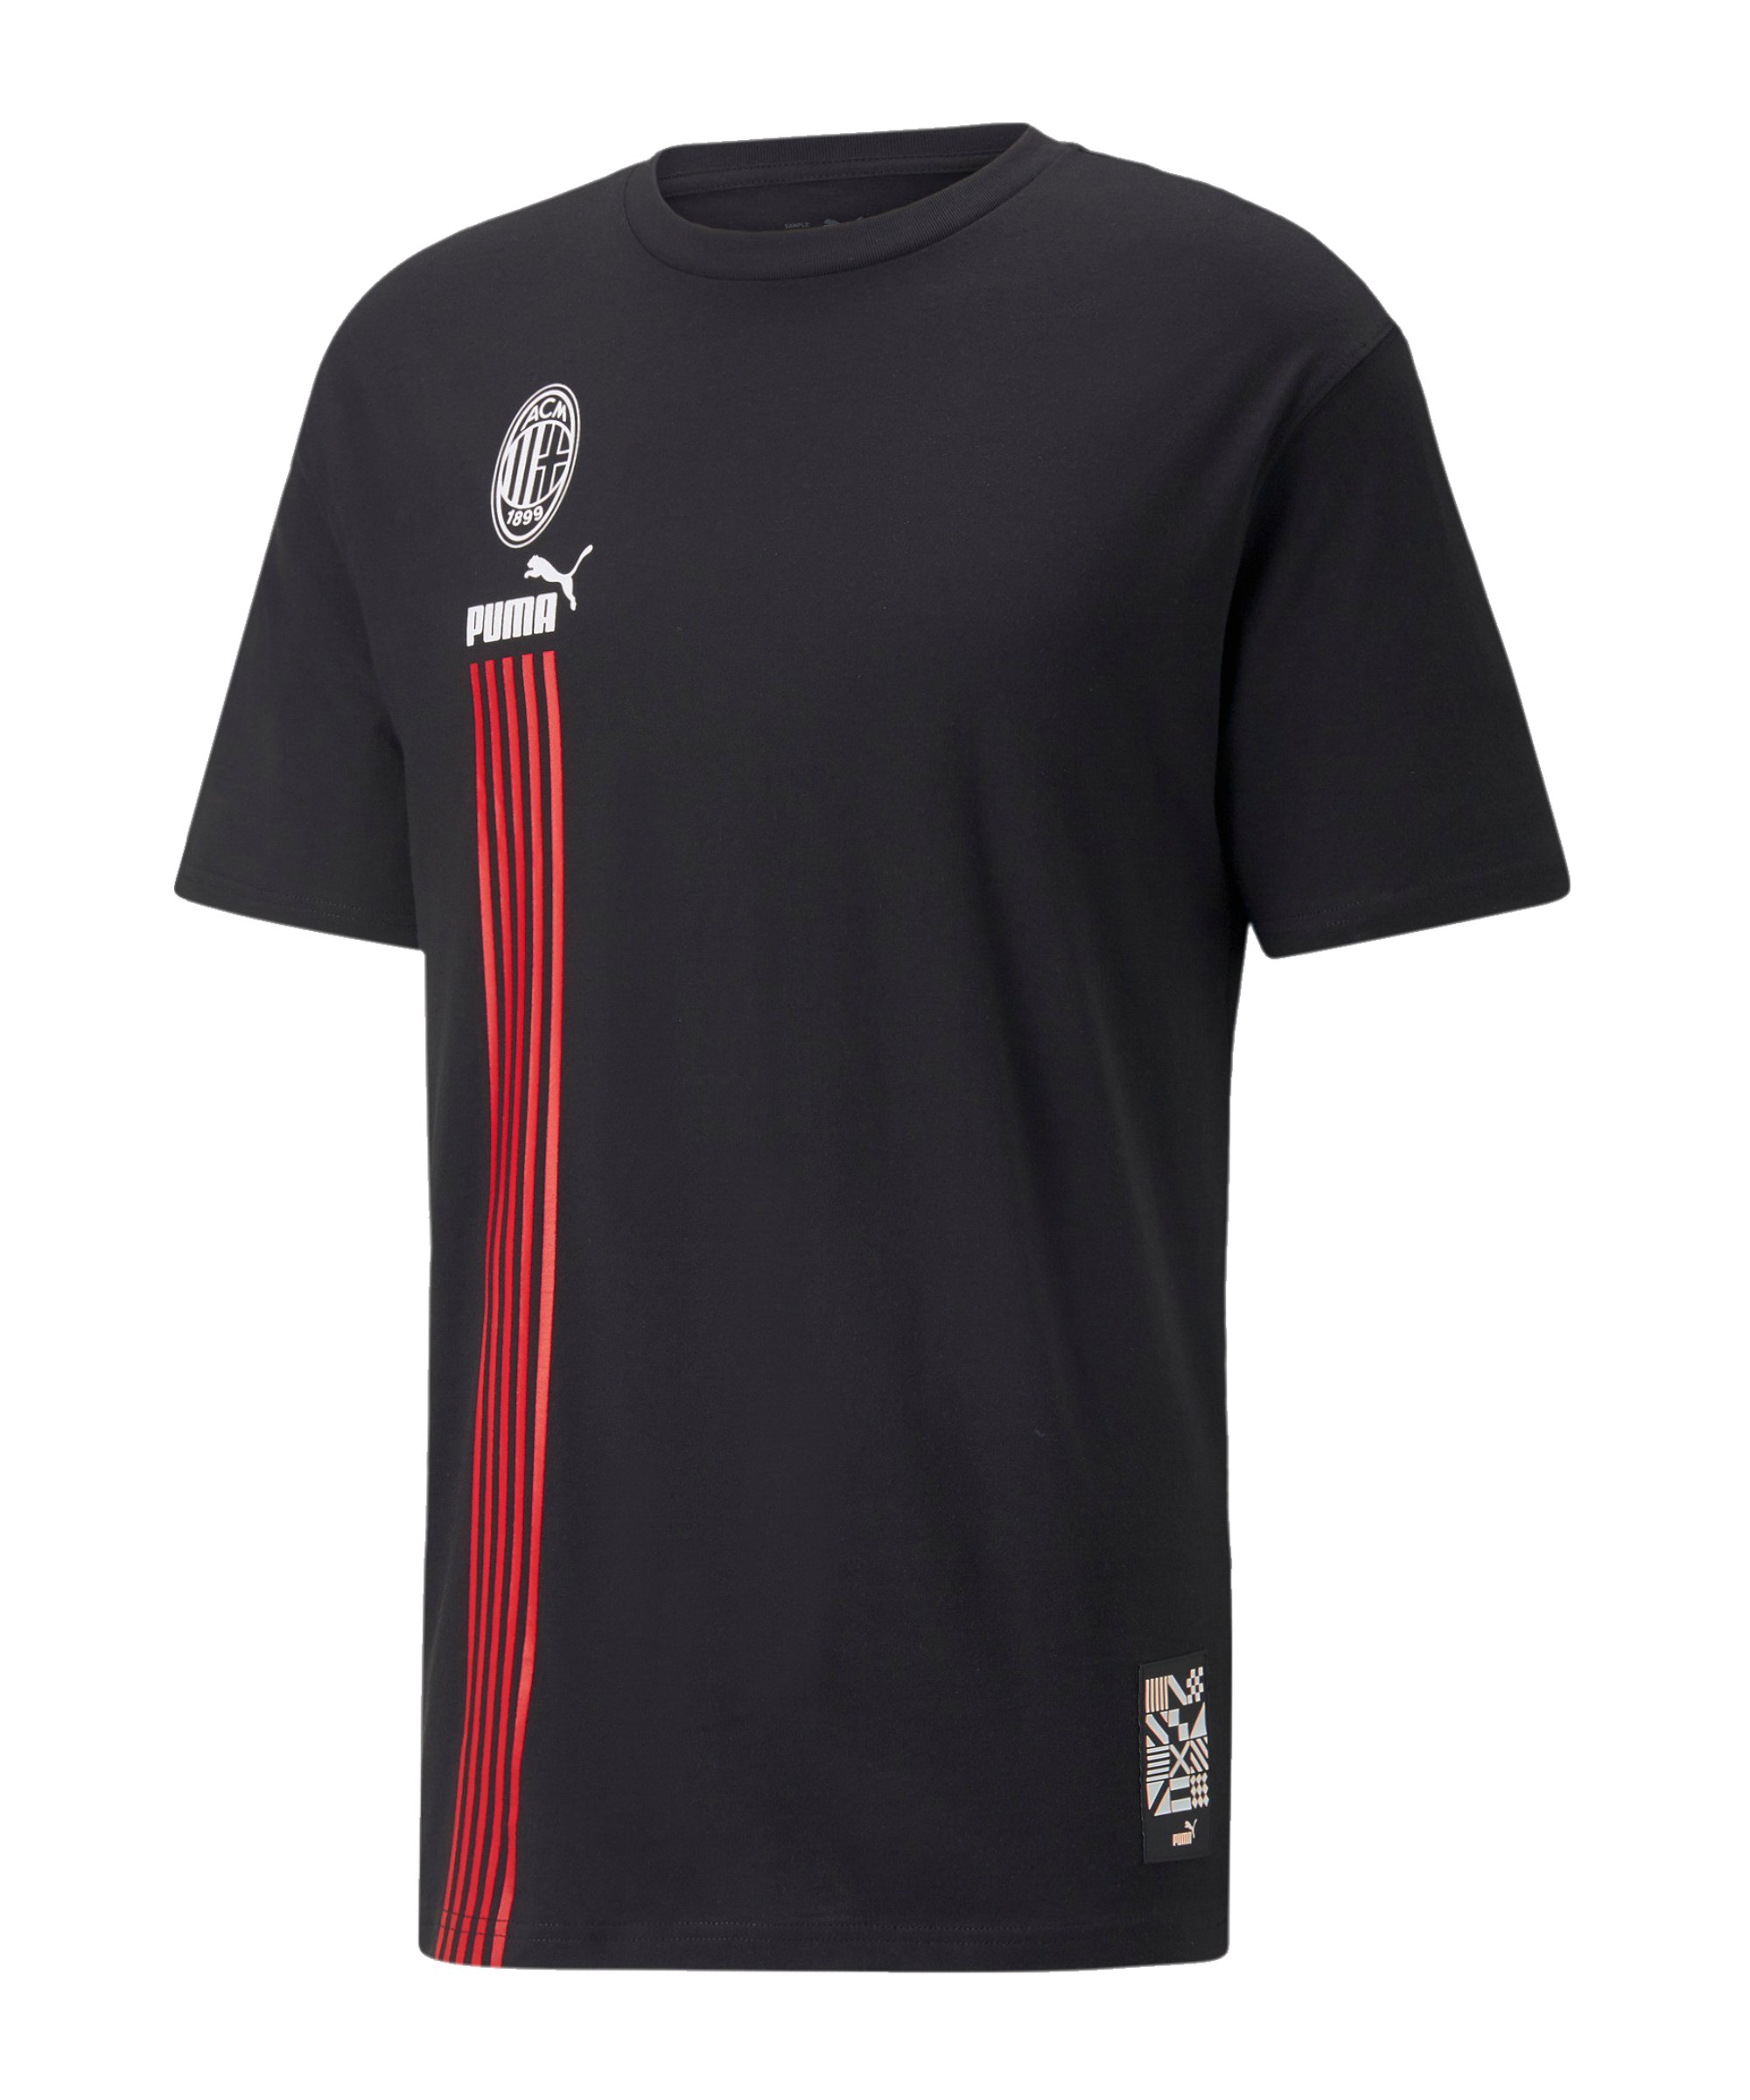 PUMA AC Mailand FtblCulture T-Shirt Schwarz Rot F01 - Schwarz